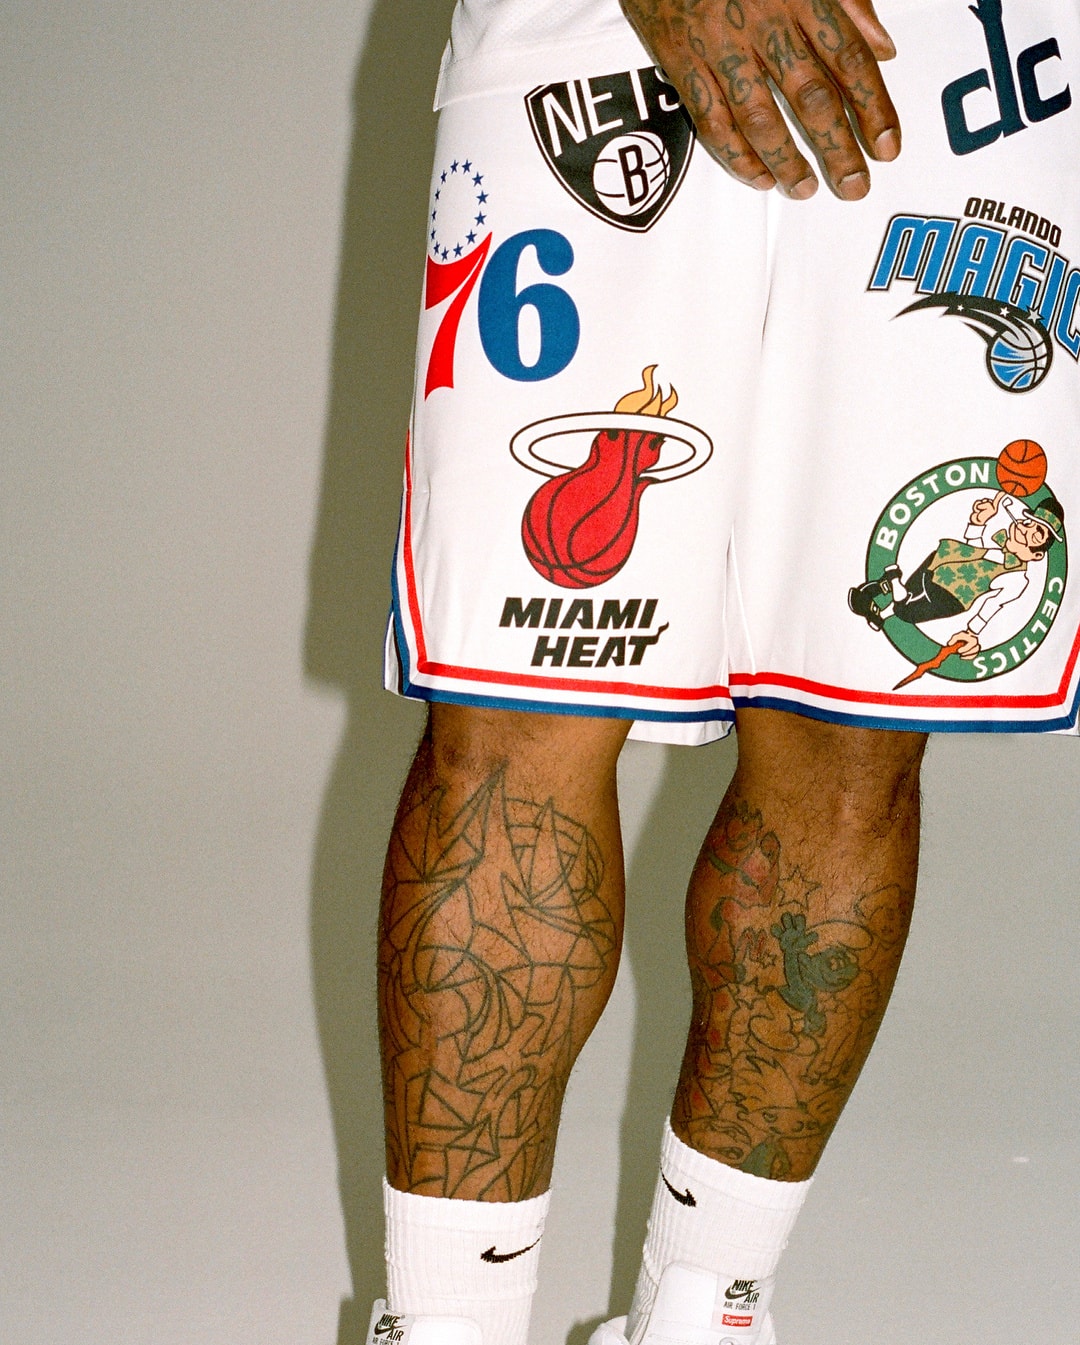 J.R. Smith 演繹全新 Supreme x Nike x NBA 聯名球衣系列